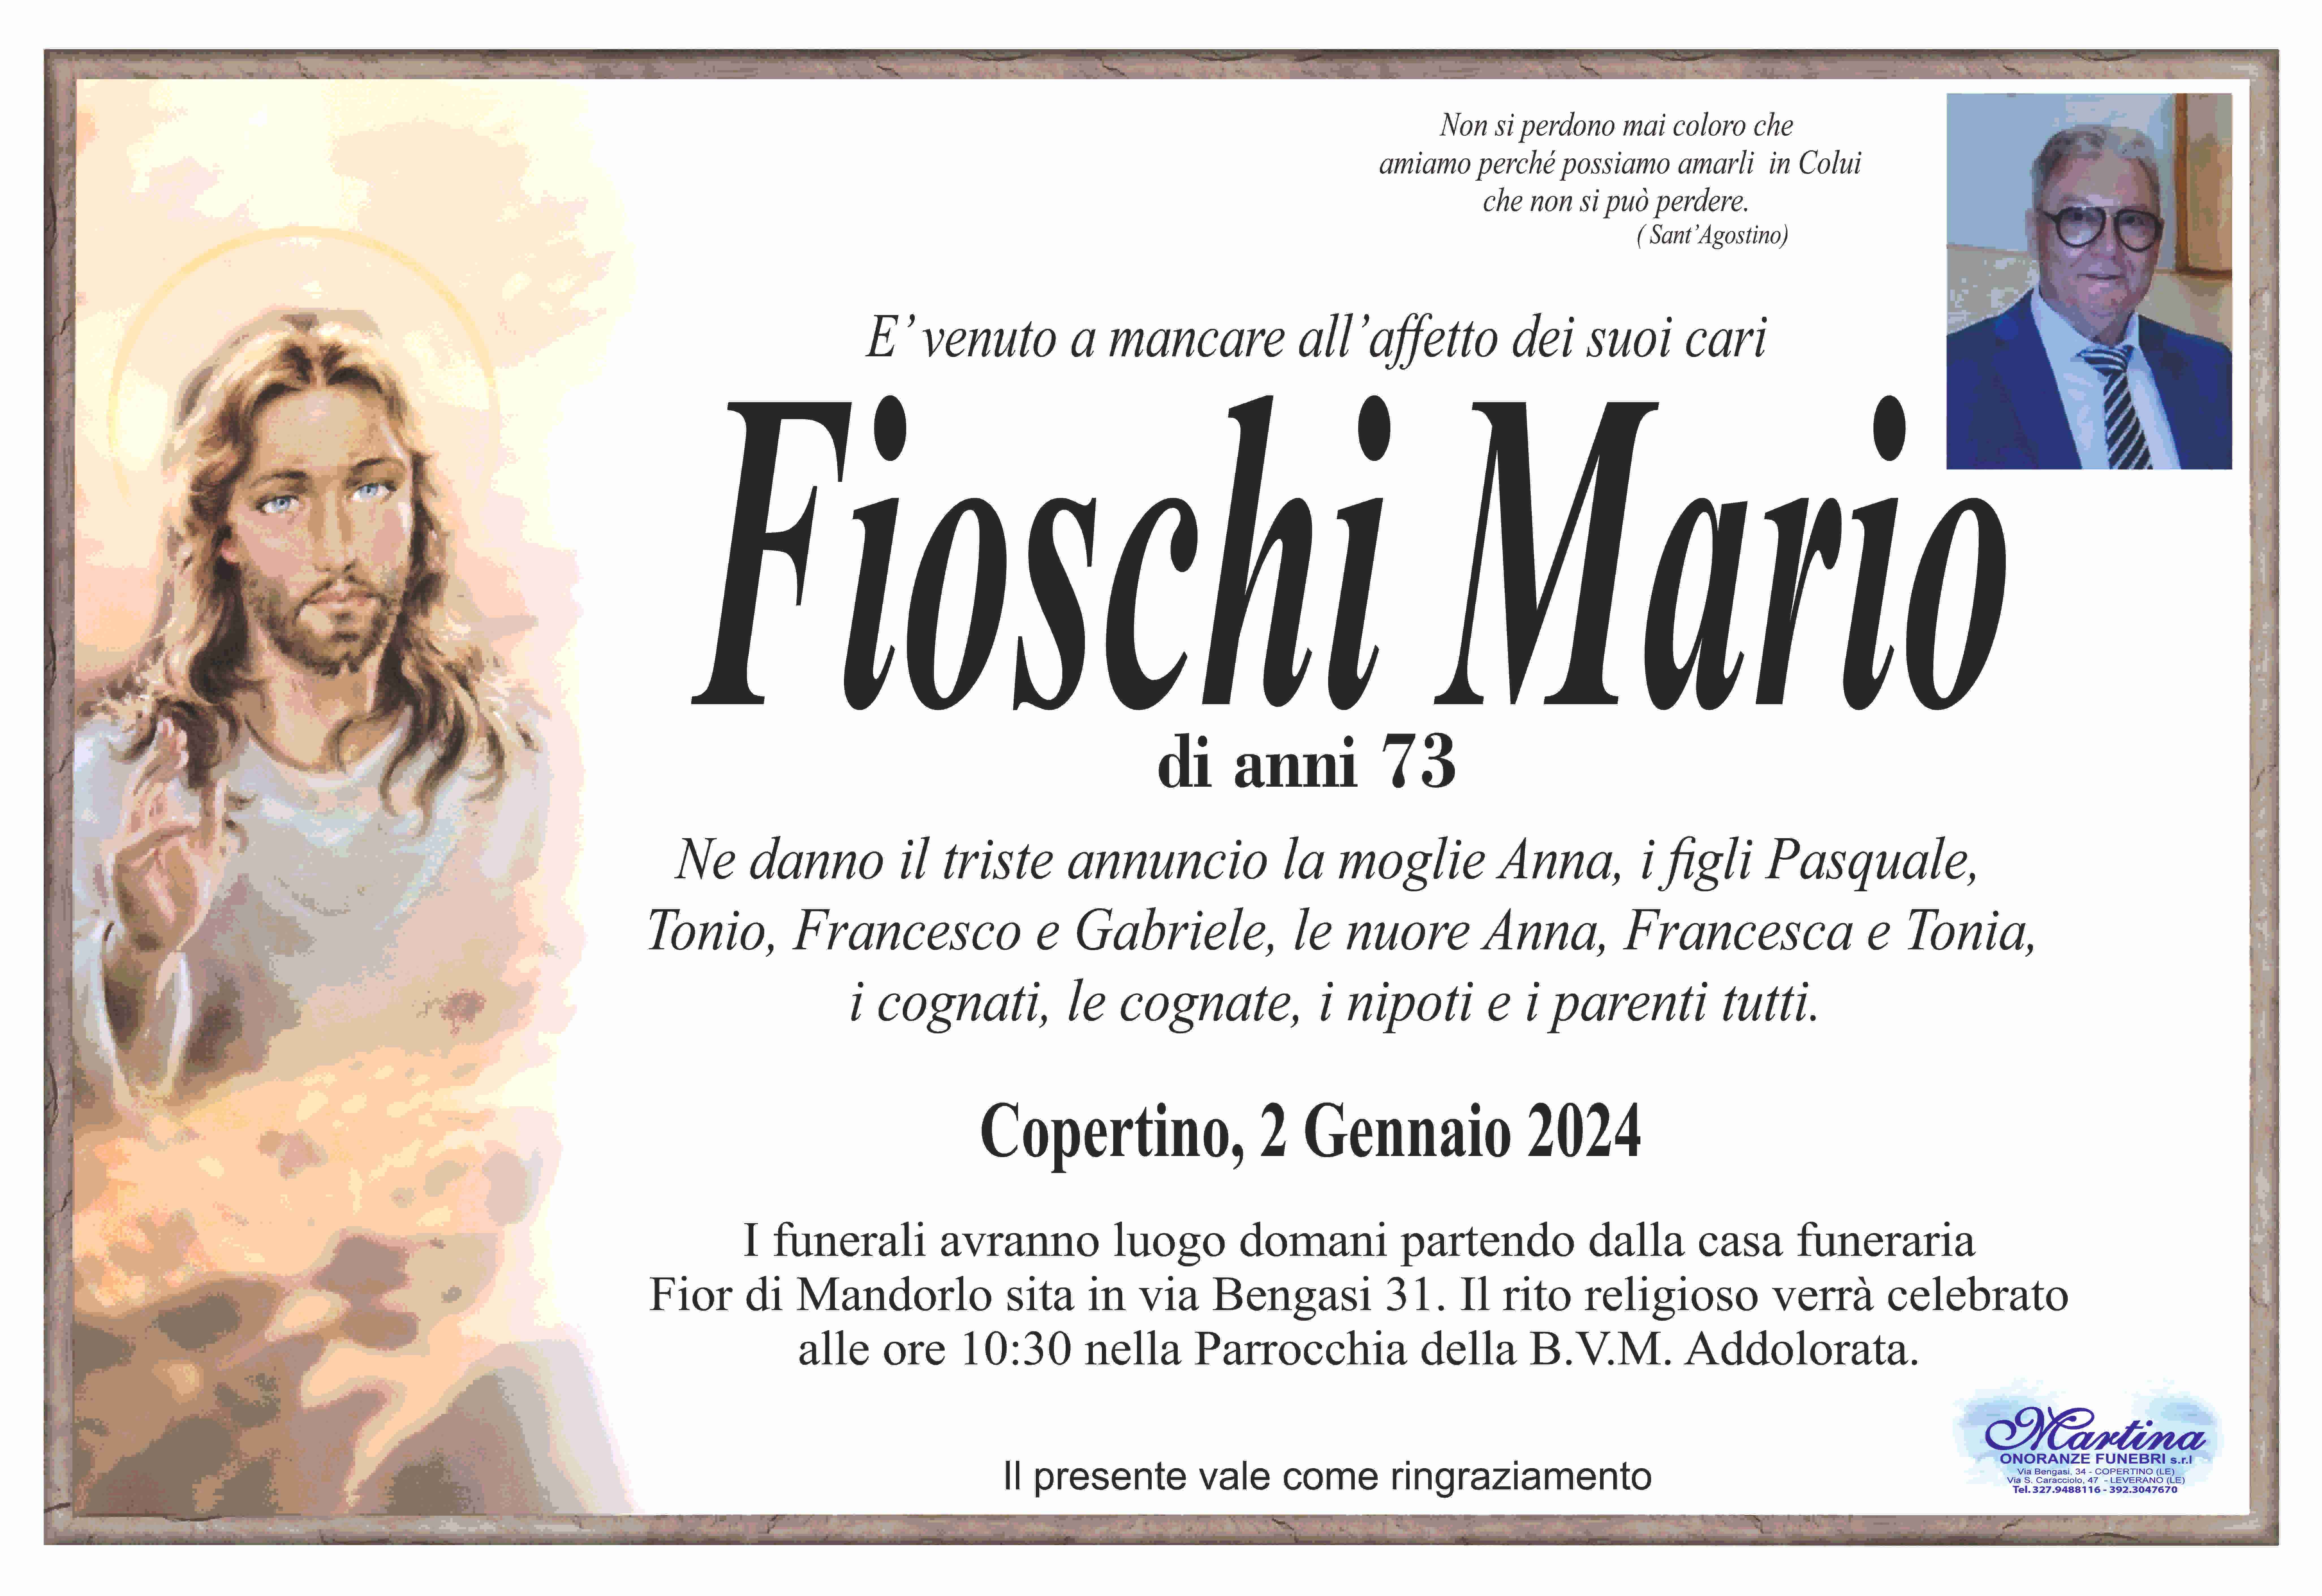 Mario Fioschi